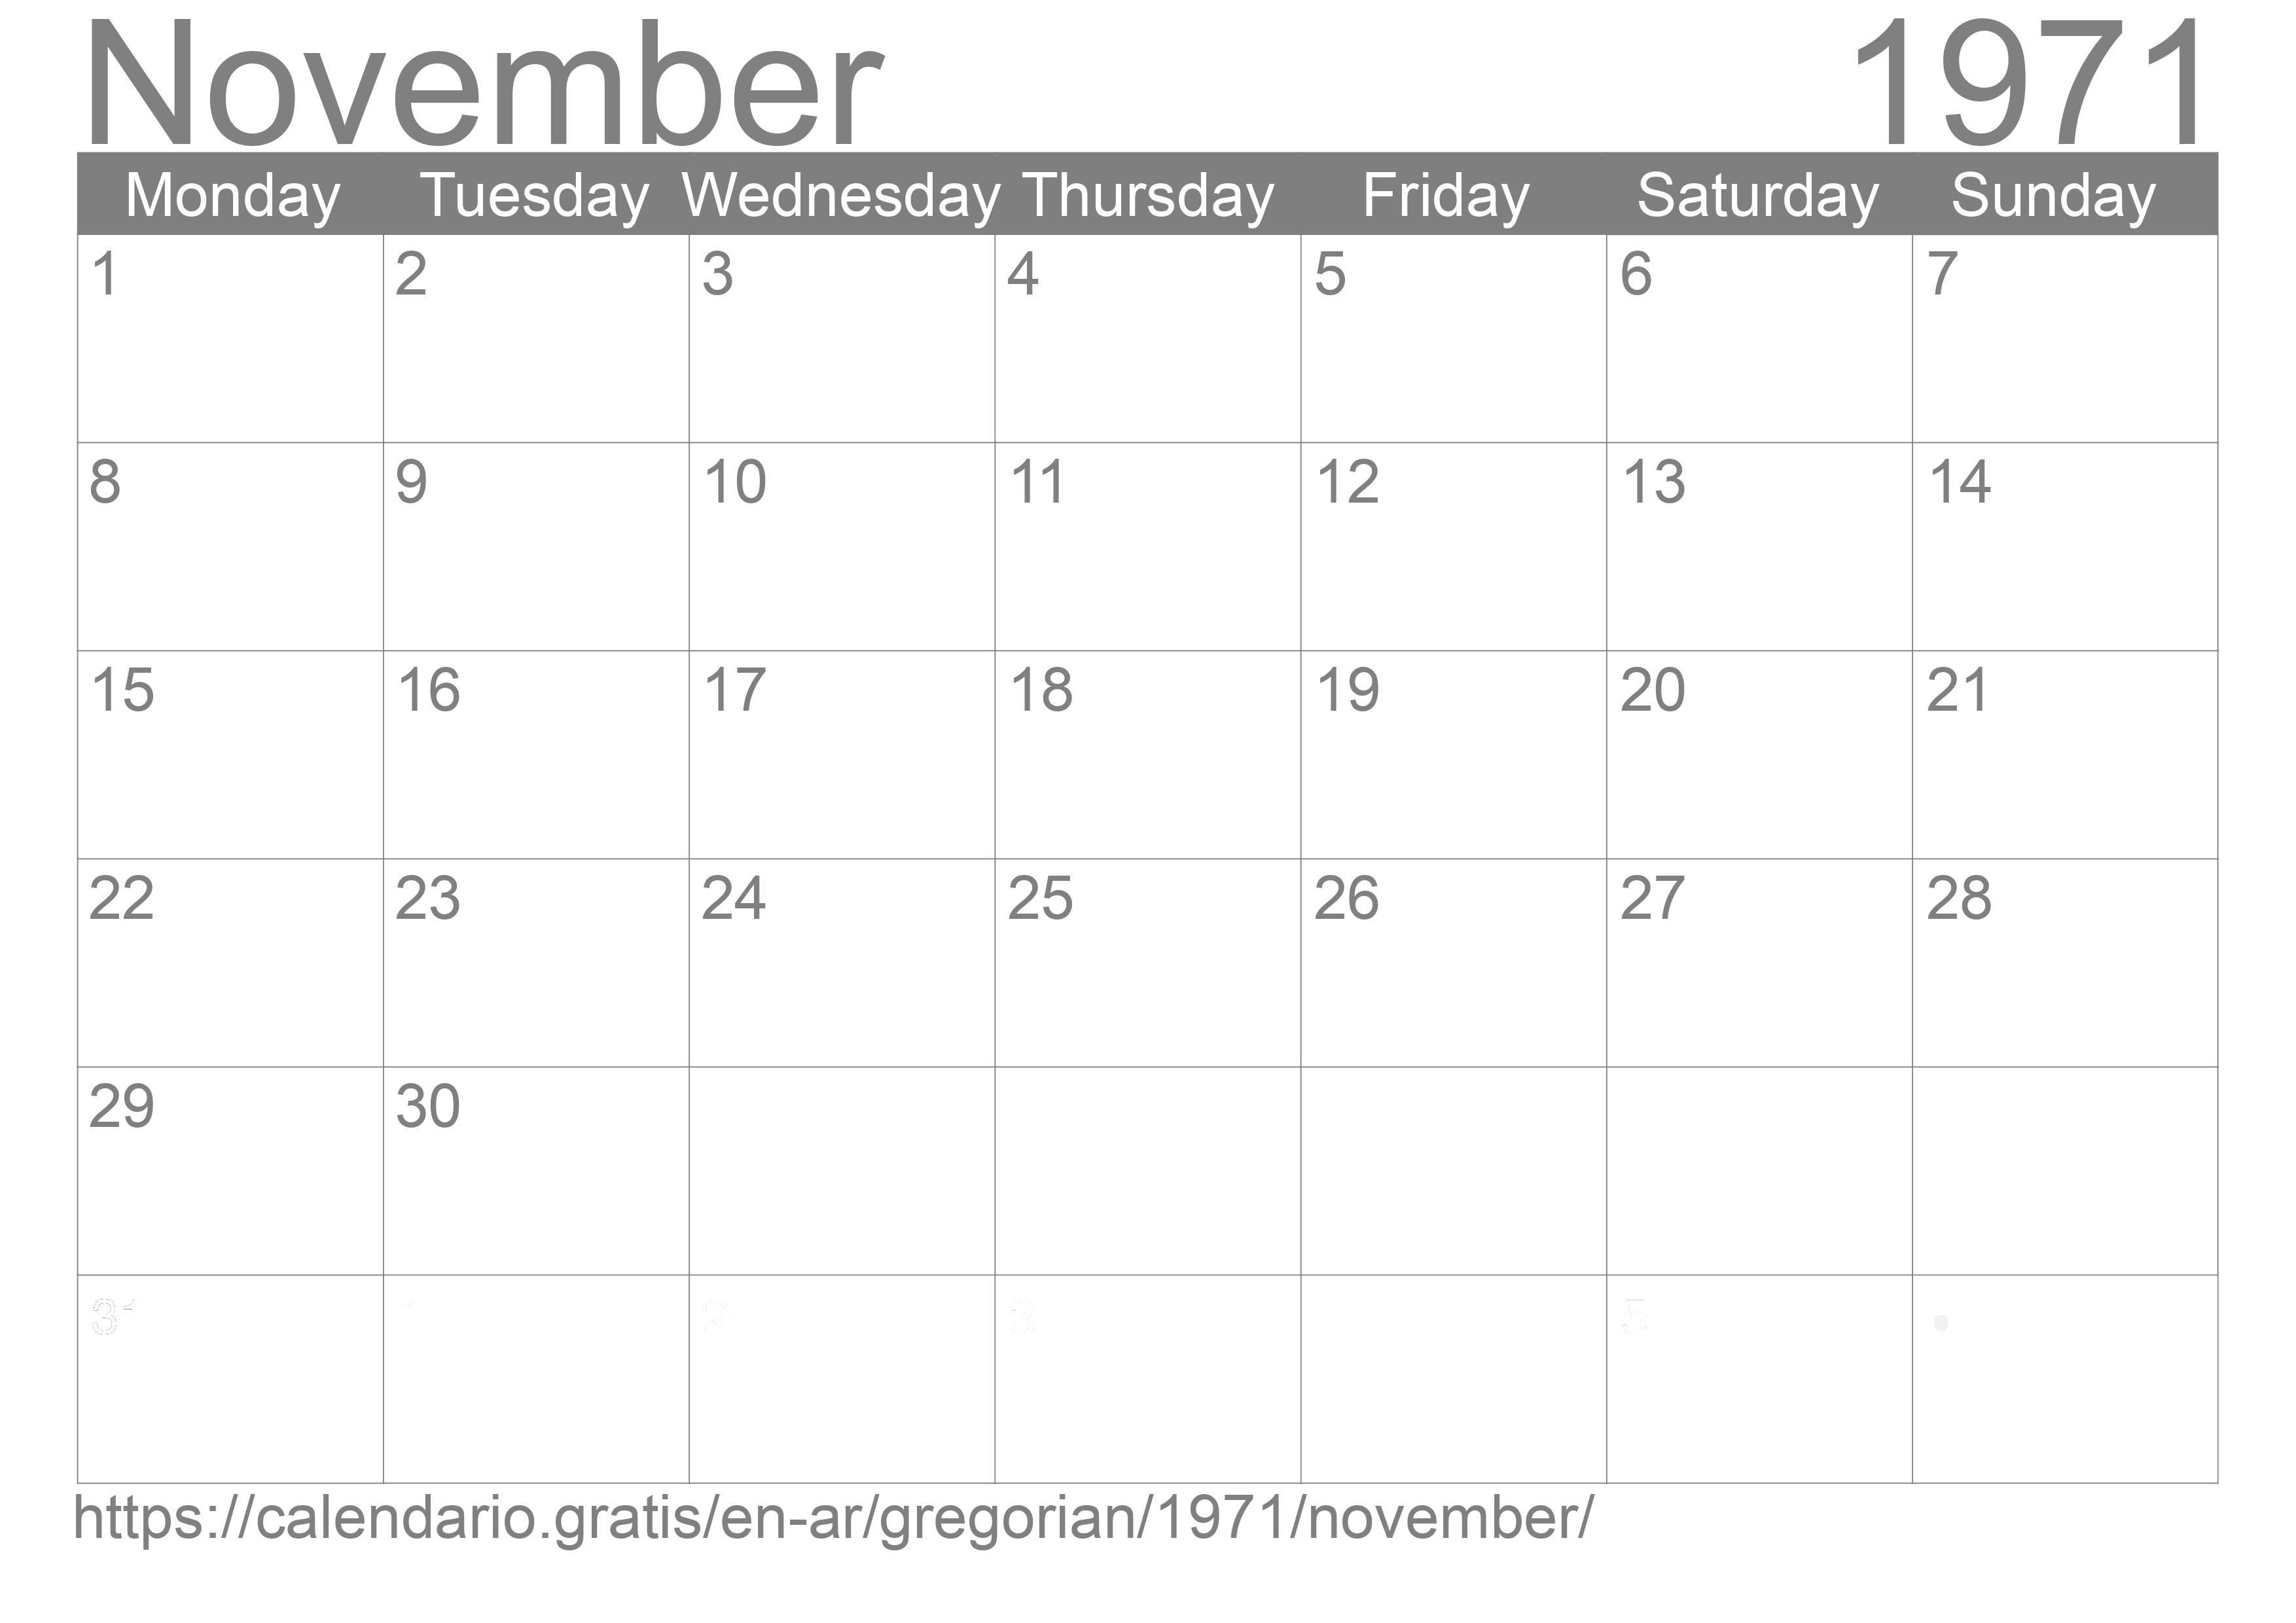 Calendar November 1971 to print